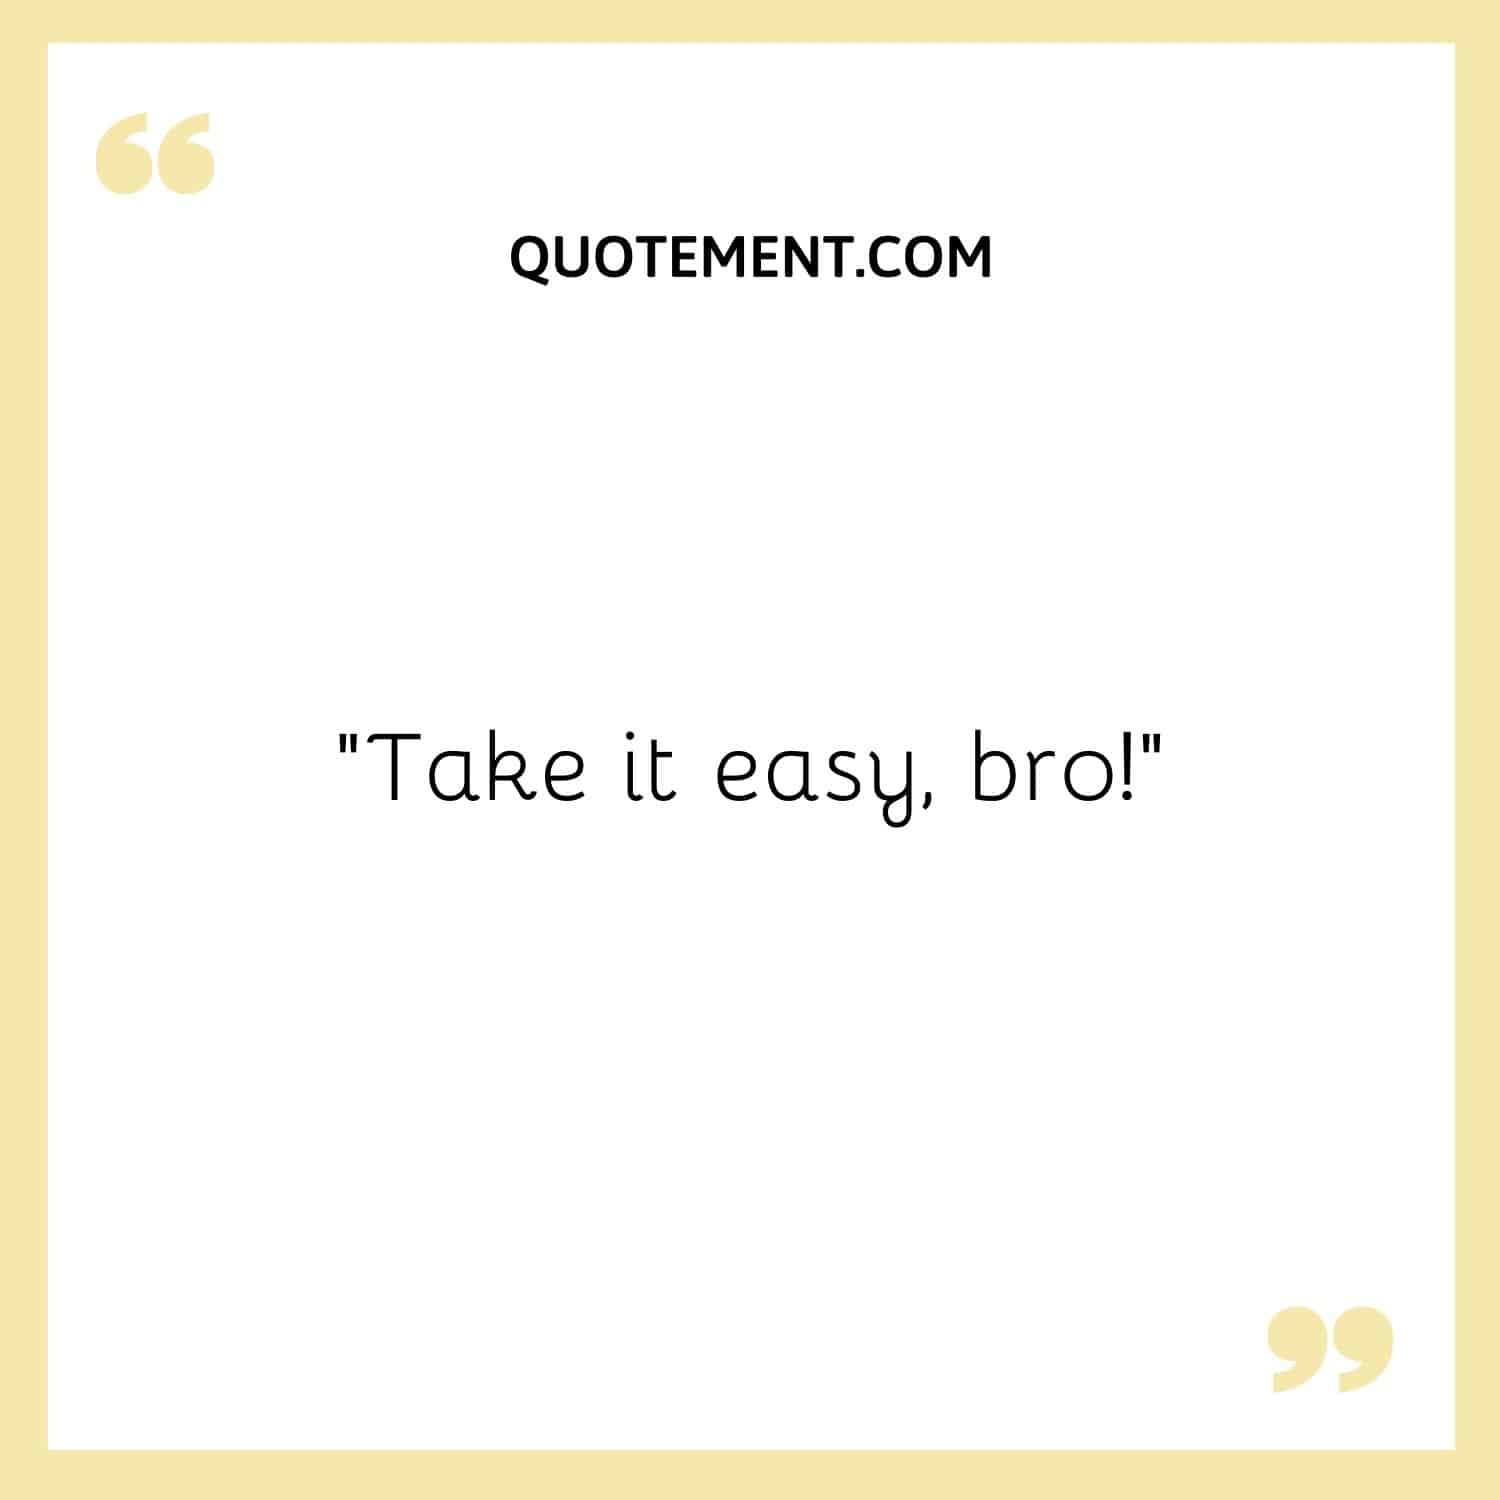 Take it easy, bro!